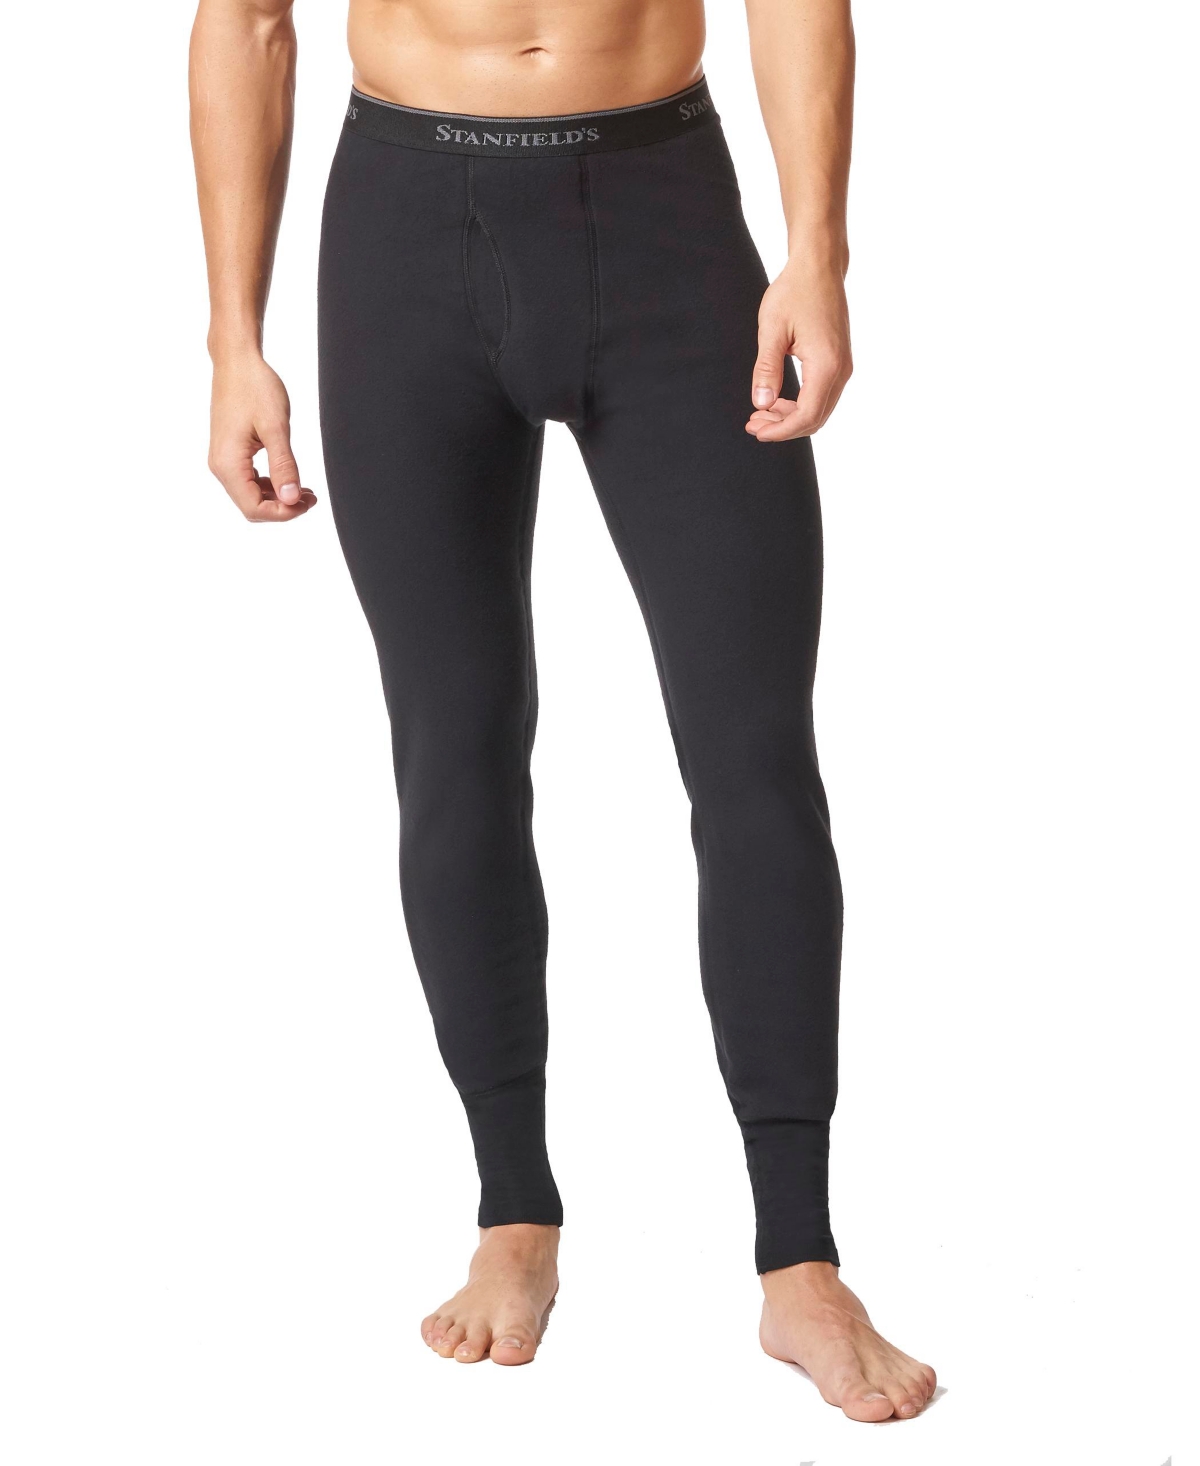 Men's Micro Fleece Thermal Long Johns Underwear - Black